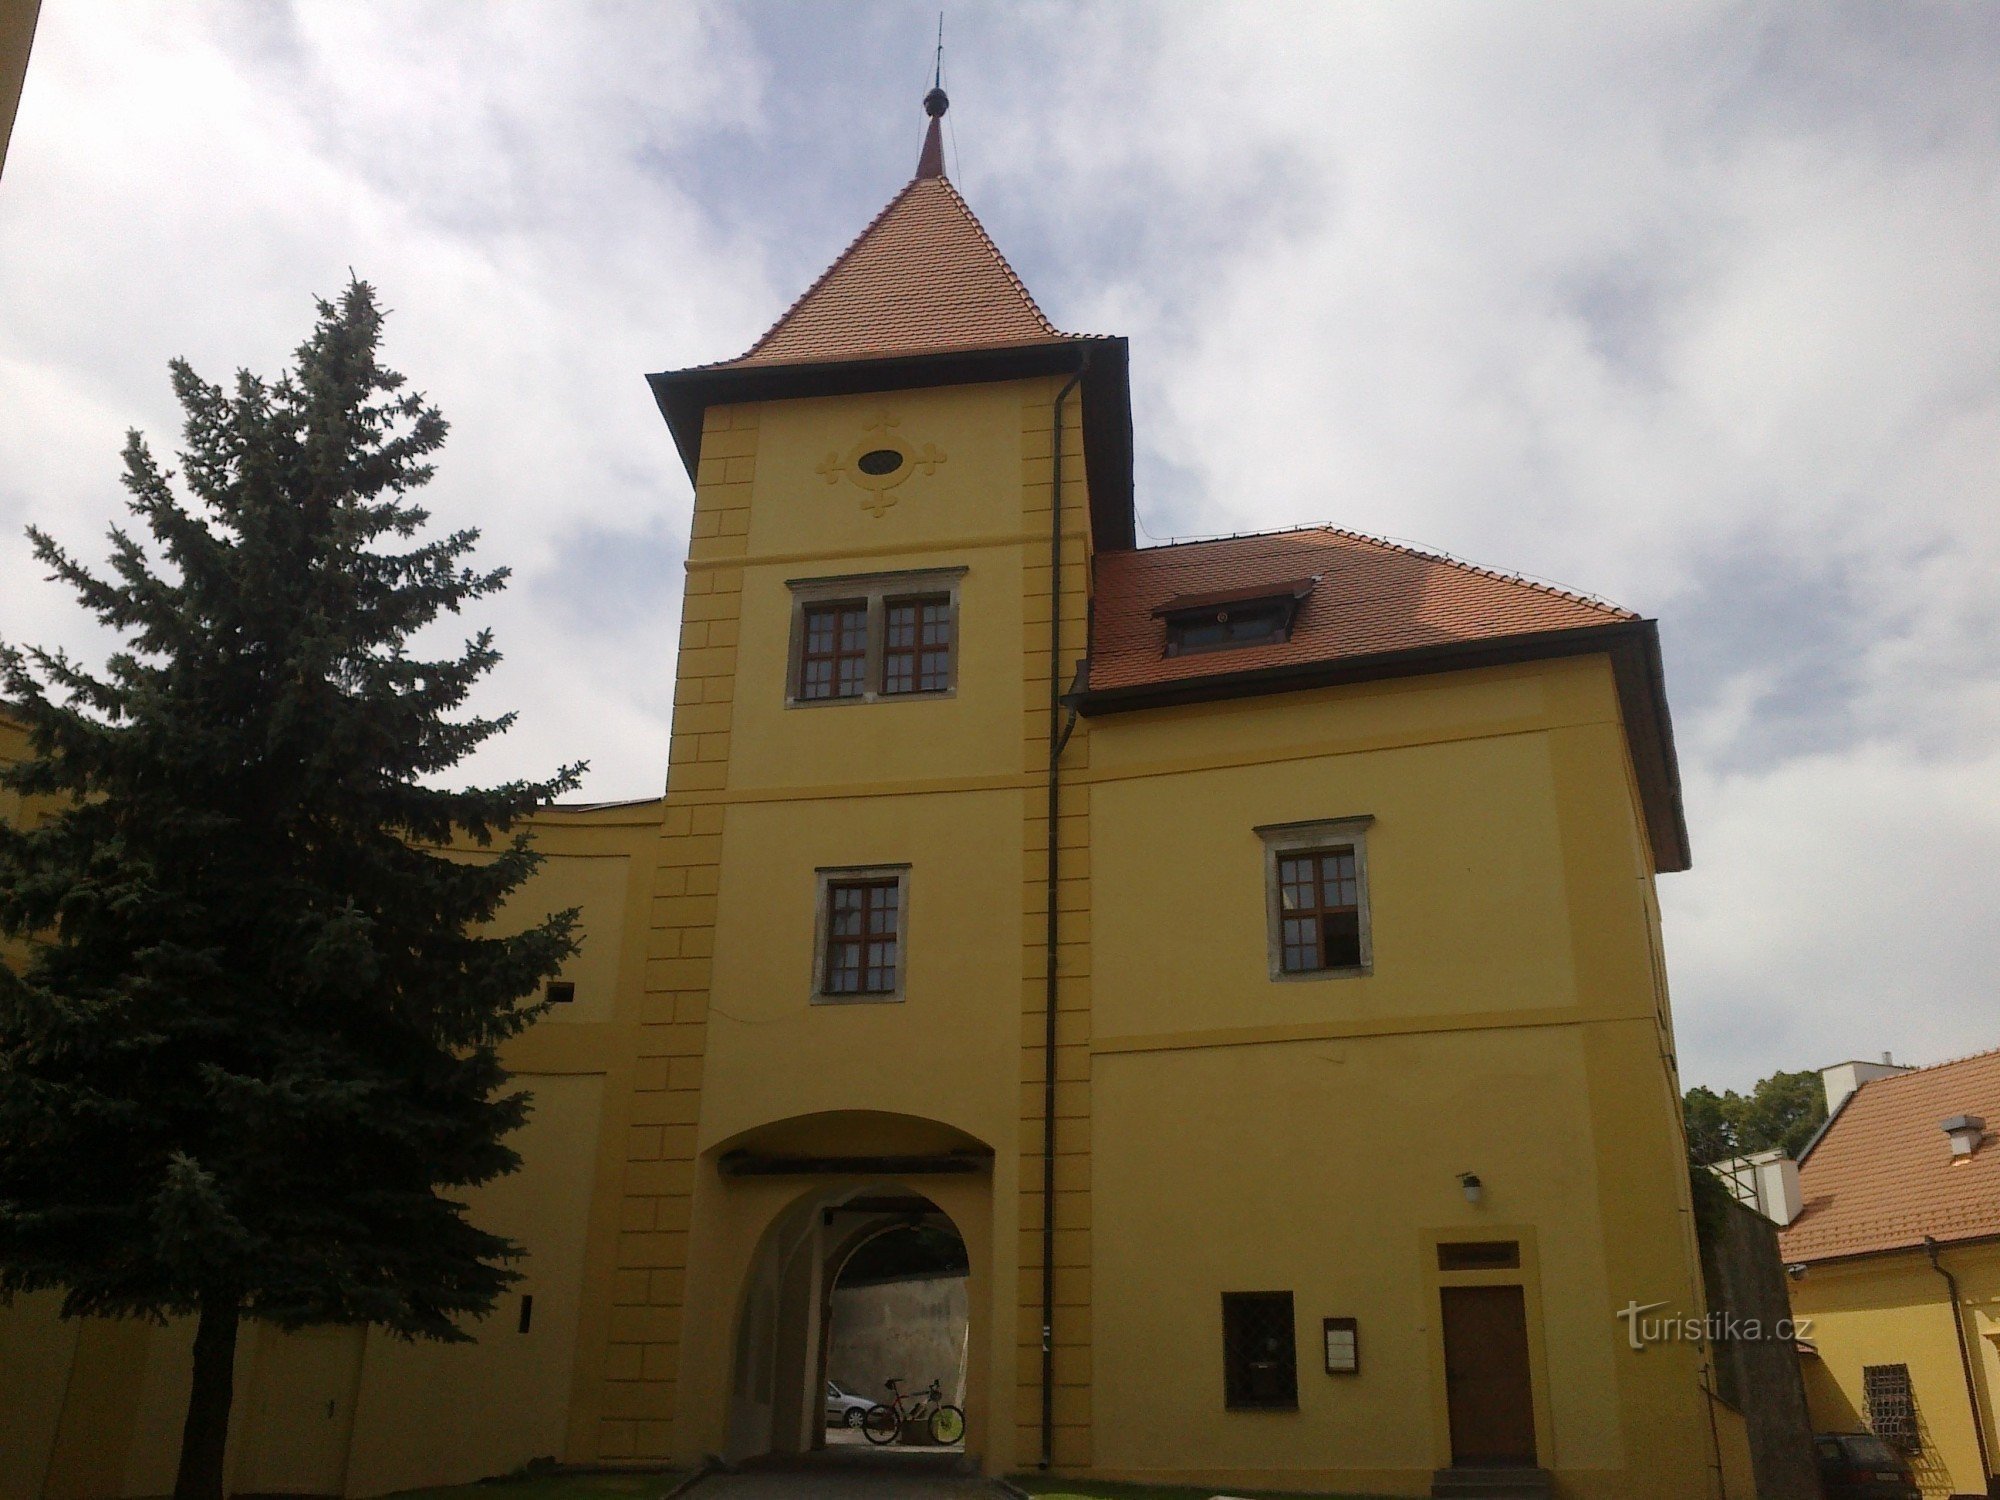 Polná - historical town in Vysočina.